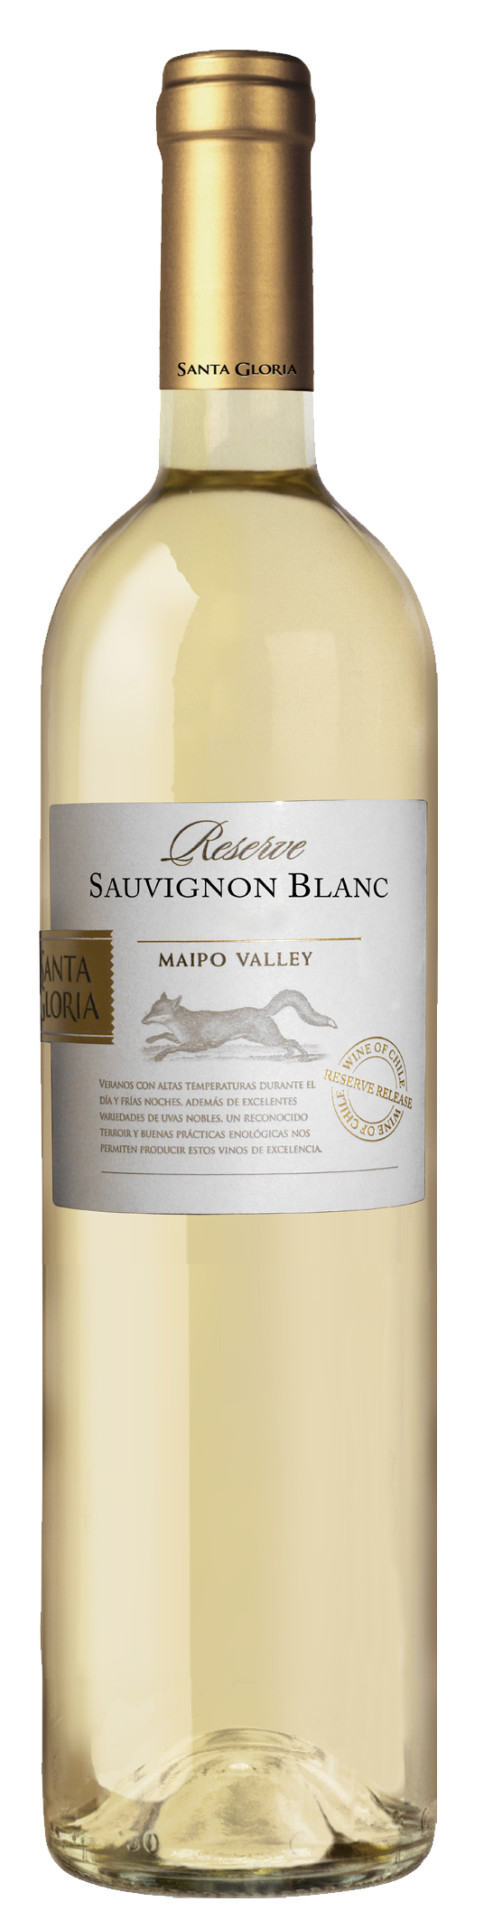 Santa Gloria Reserva Sauvignon Blanc chilei minőségi fehérbor 0.75l